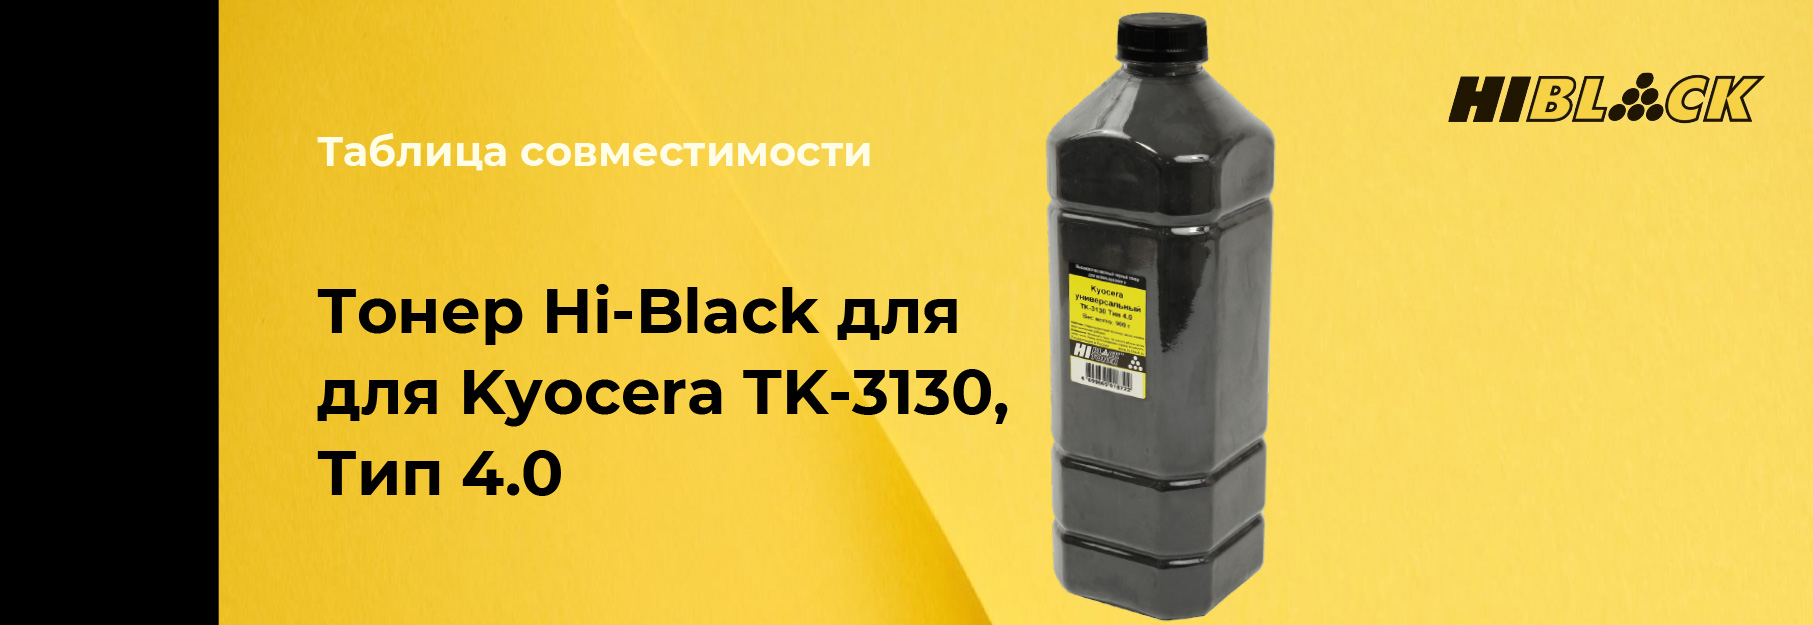 tablica-sovmestimosti-Hi-Black-Kyocera-TK-3130,-type-4-0.jpg